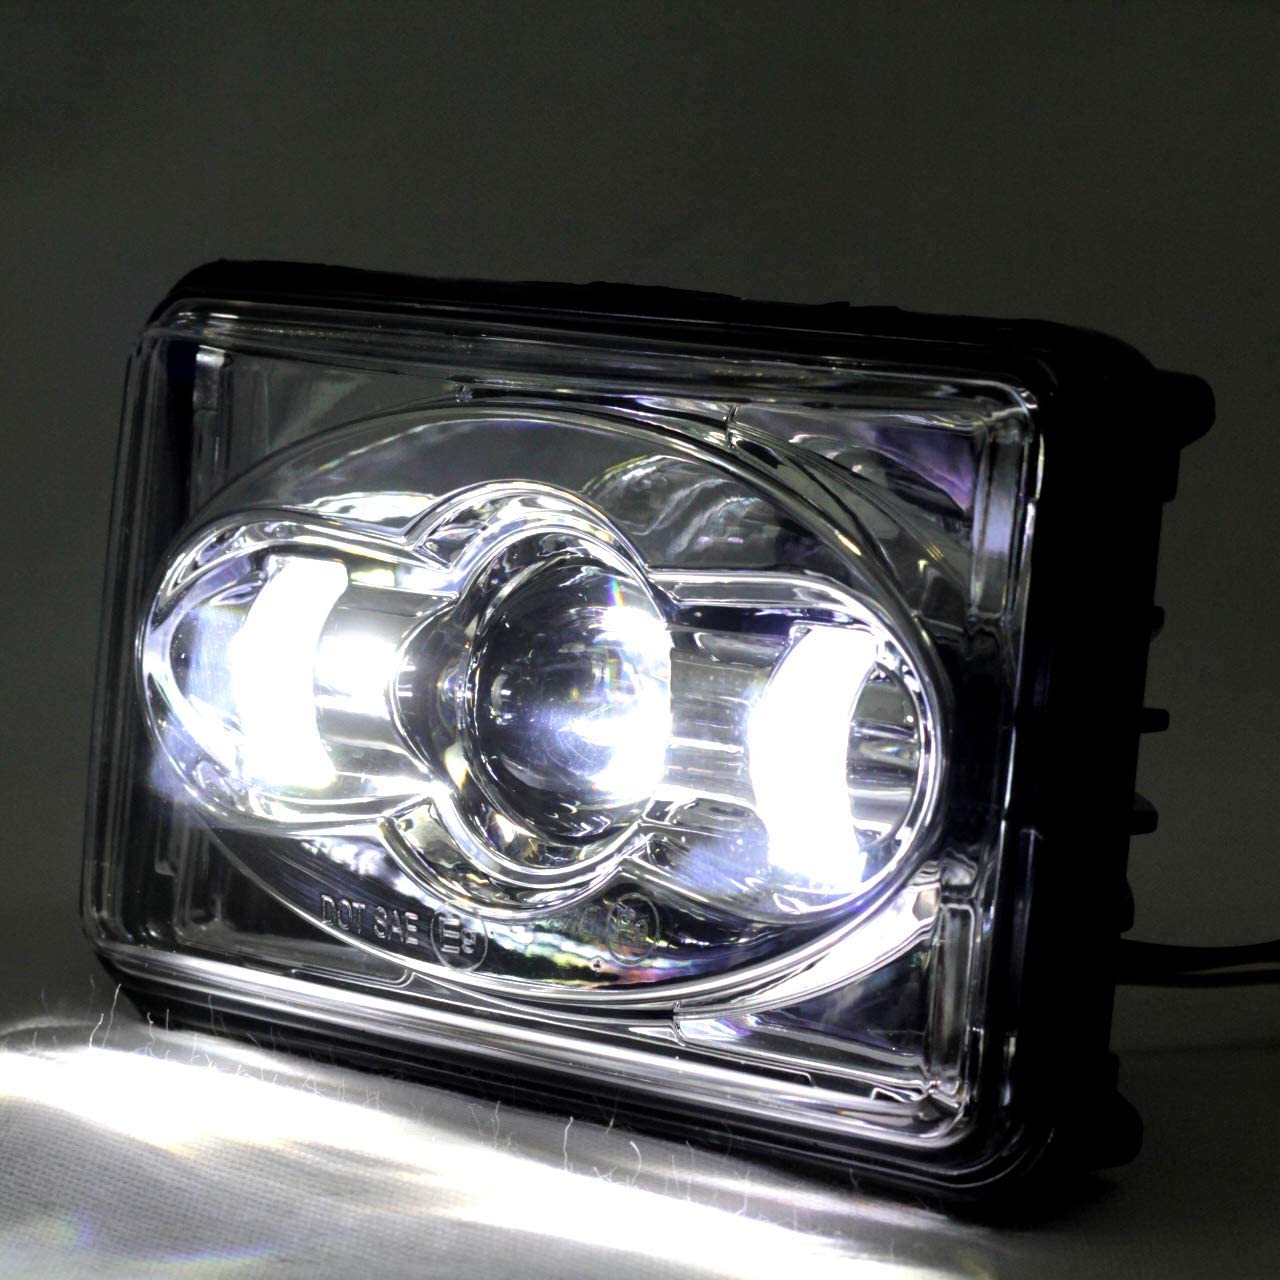 Eagle Lights 4 x 6 LED Projection Headlight - Double Pack - 2 Headlights (1A1, 2A1)